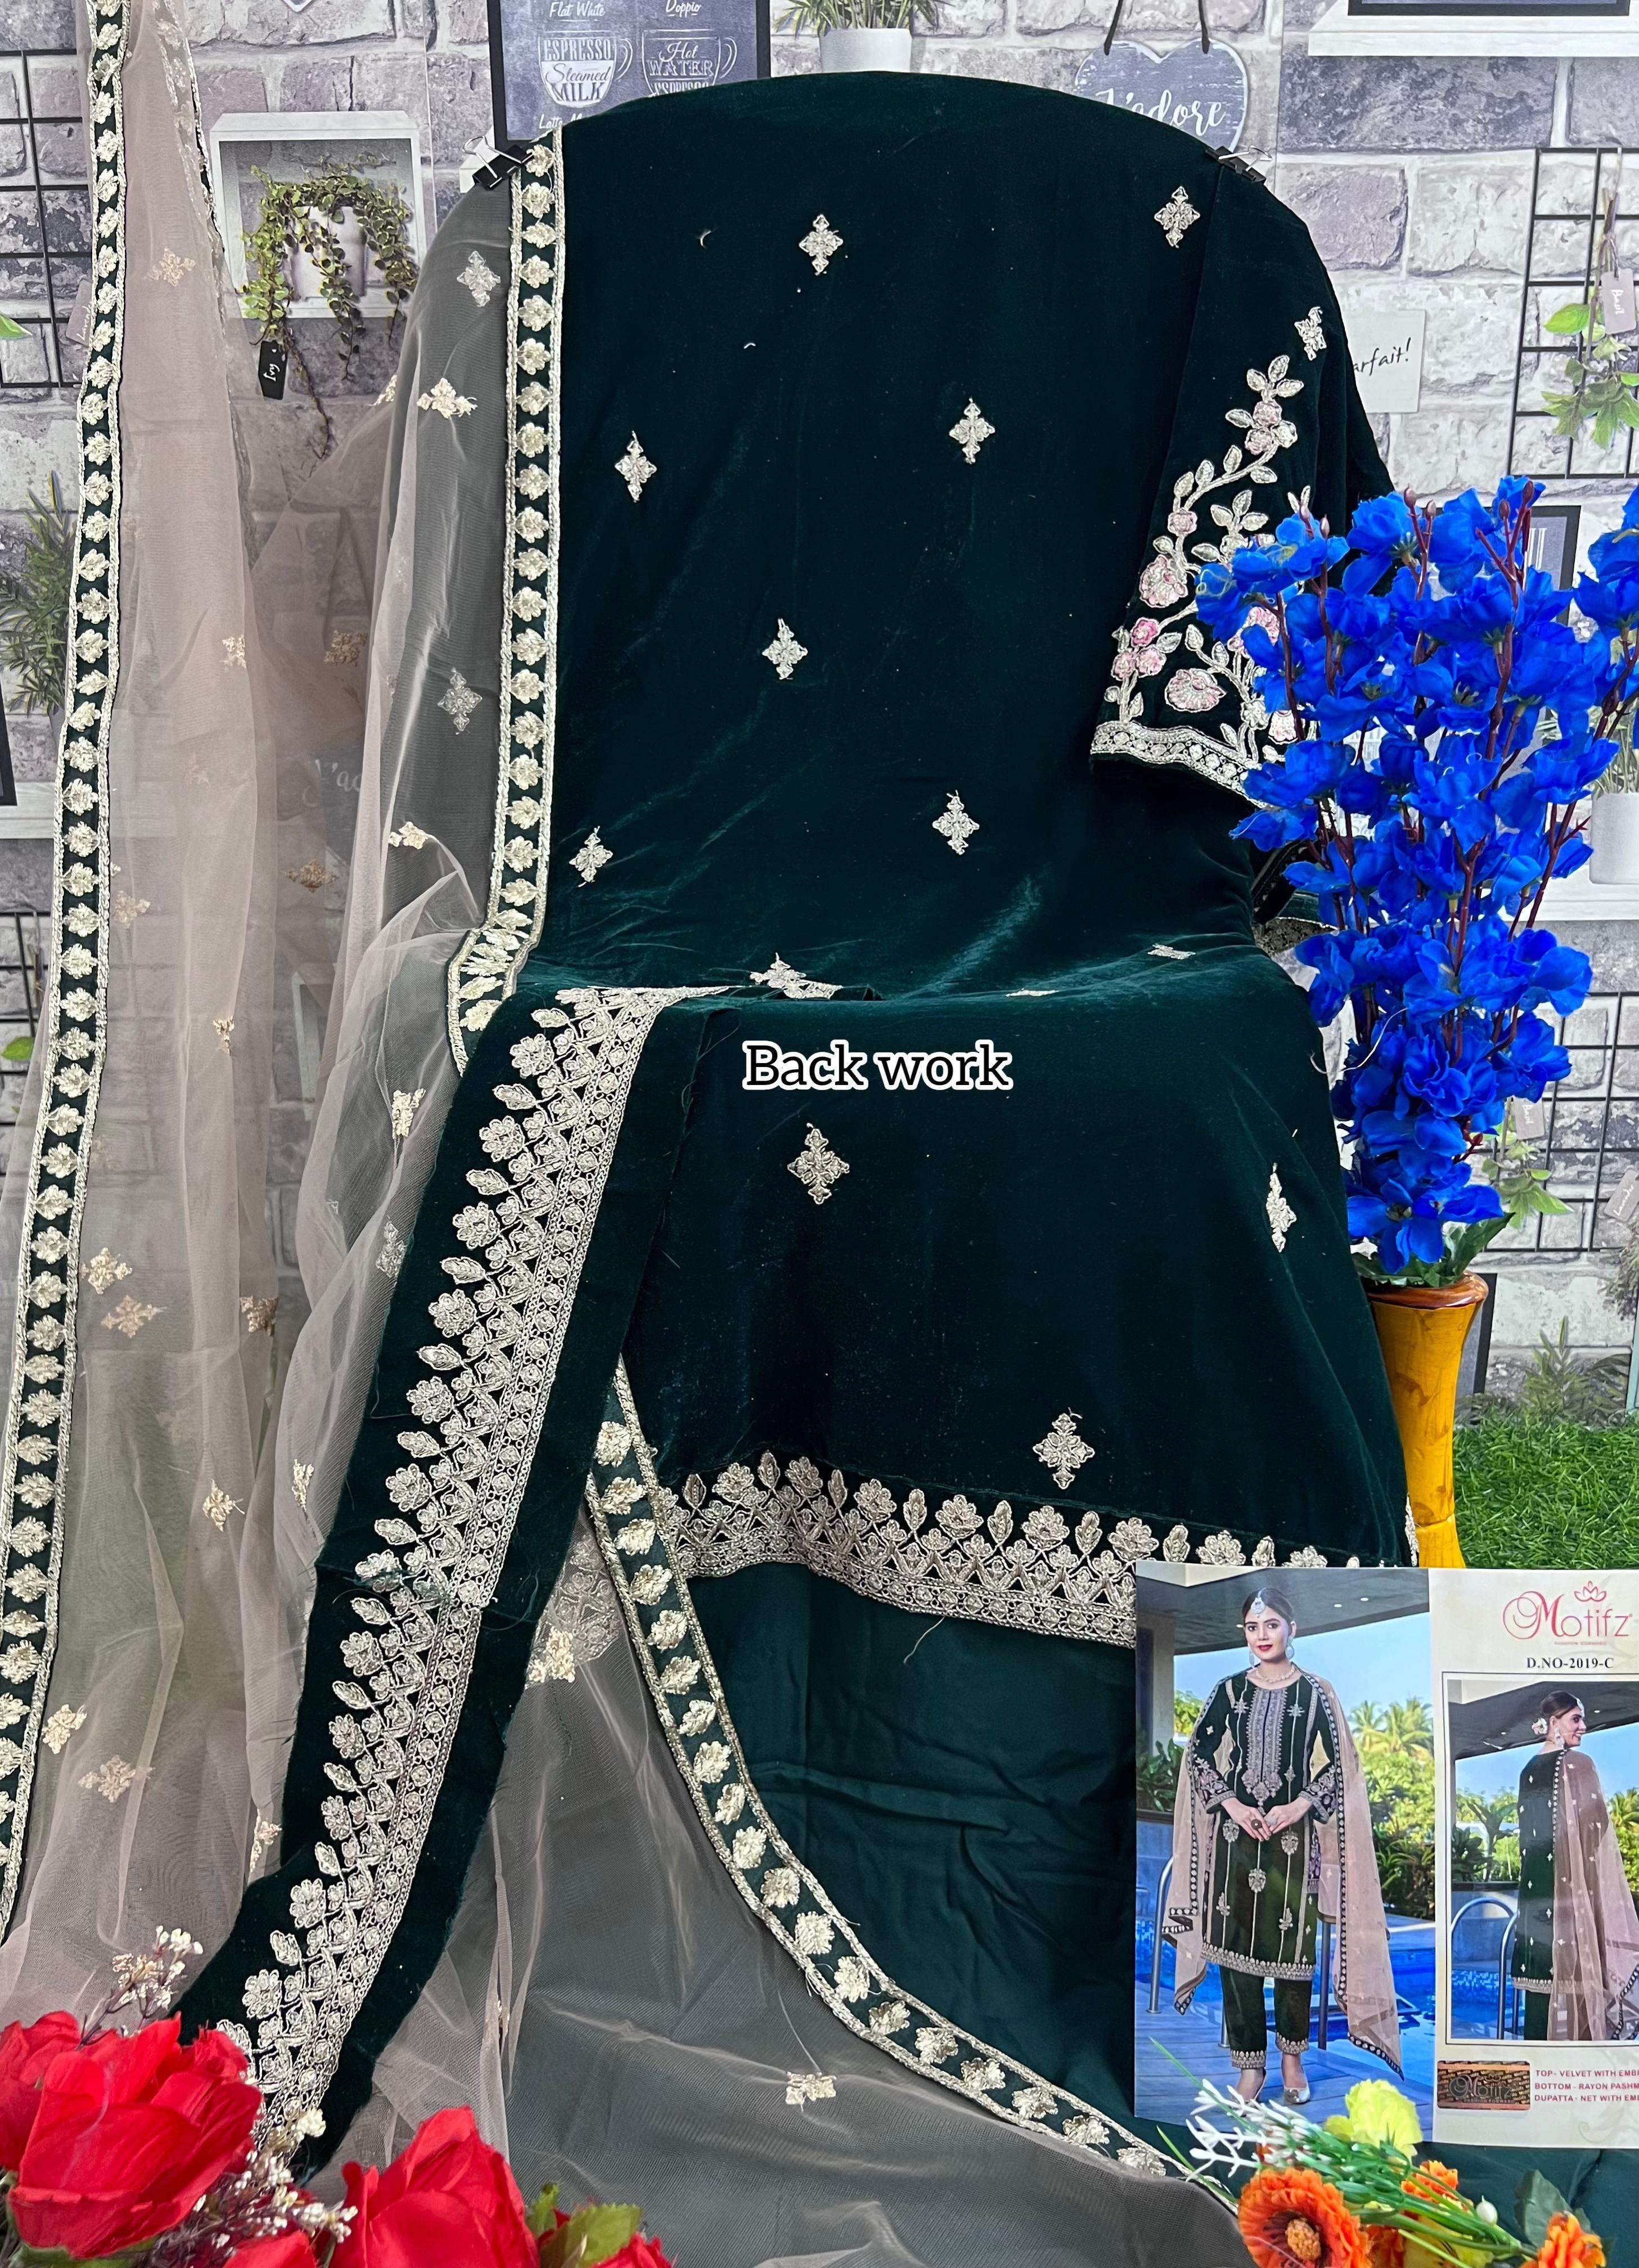 motifz 2019 colour series latest wedding wear pakistani salwar kameez wholesaler price surat gujarat